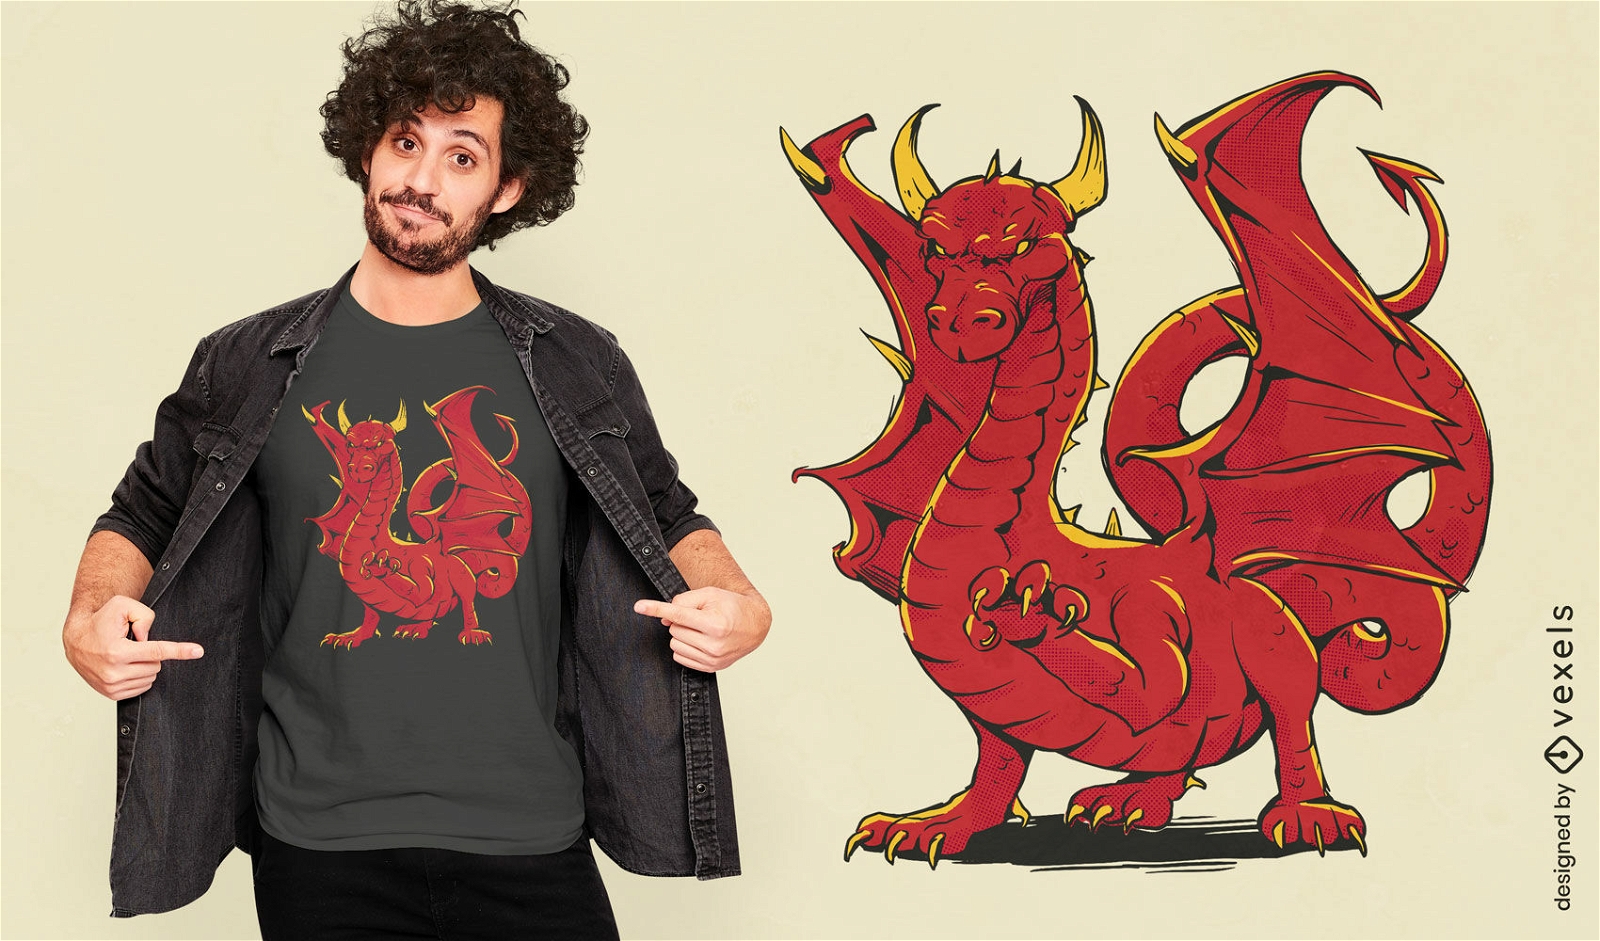 Red dragon fantasy t-shirt design